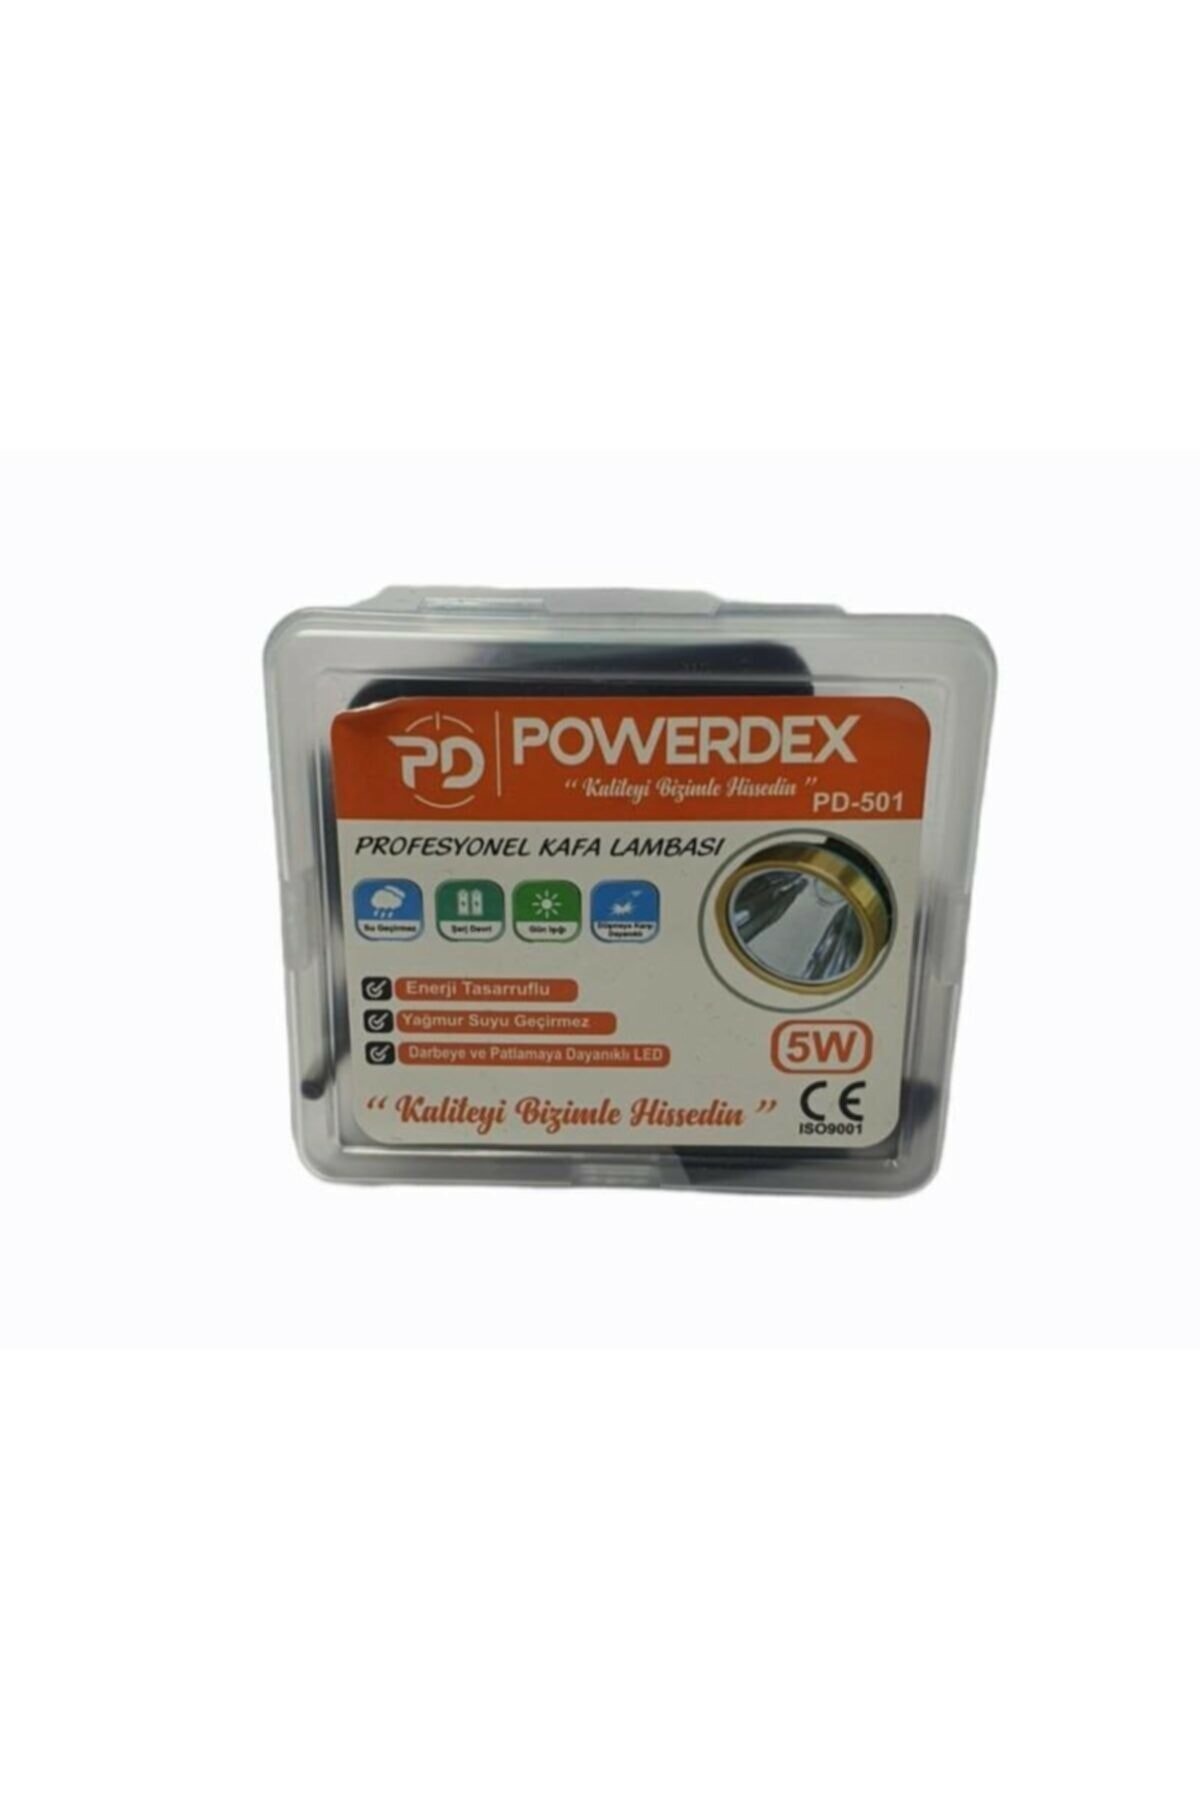 Powerdex Pd-501 Şarjlı Kafa Lambası PD-501